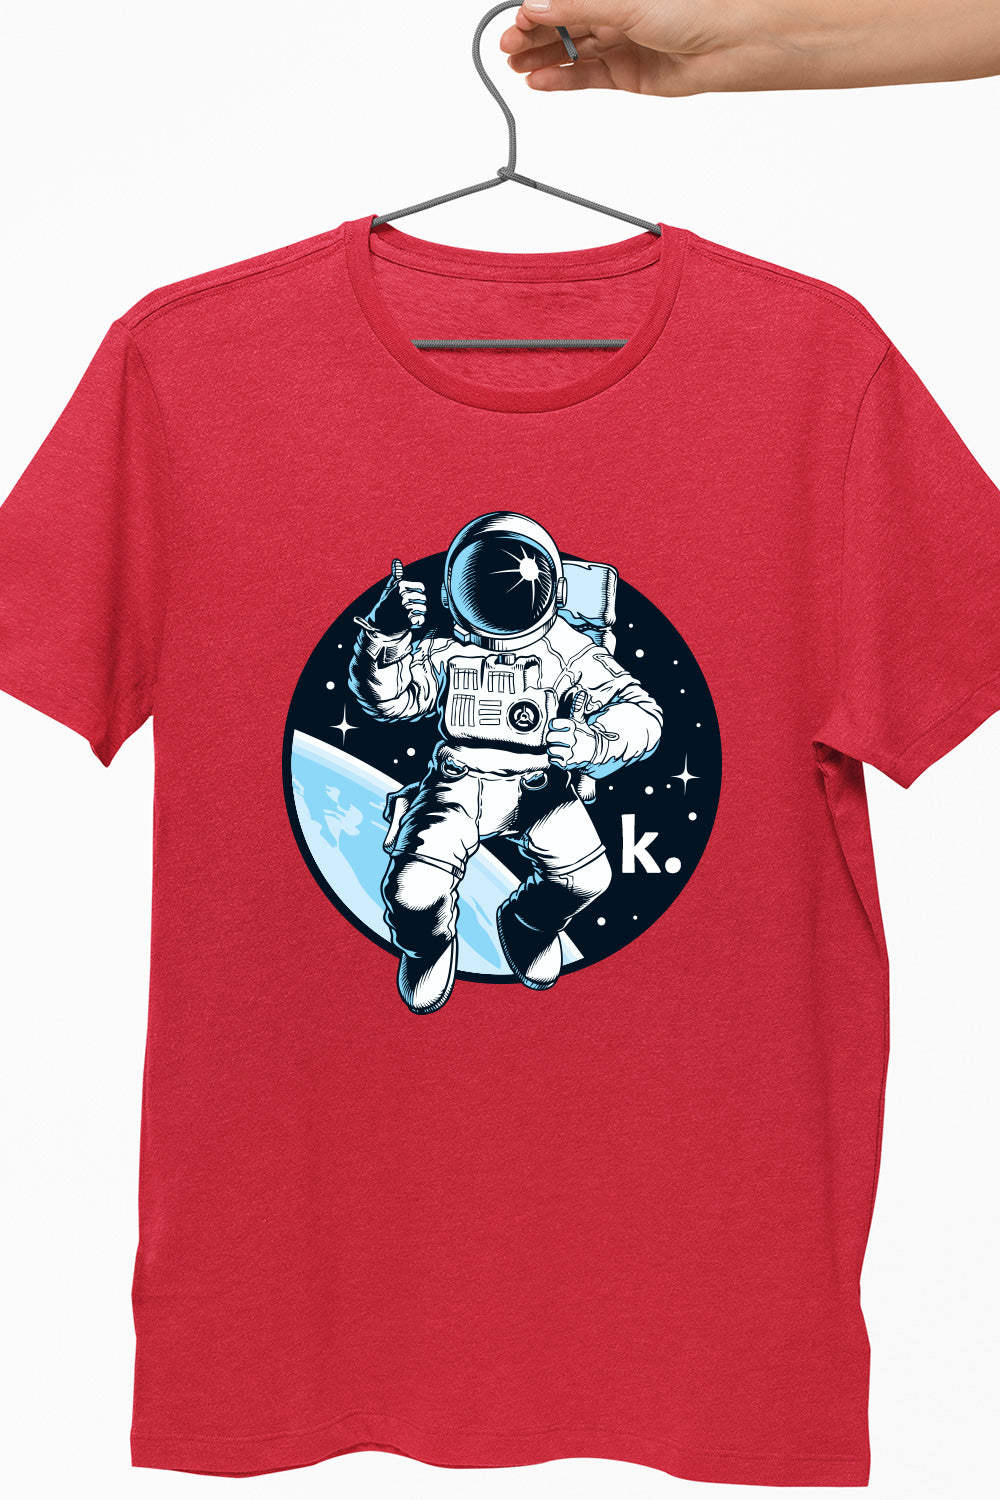 Astronaut K Red Tshirt